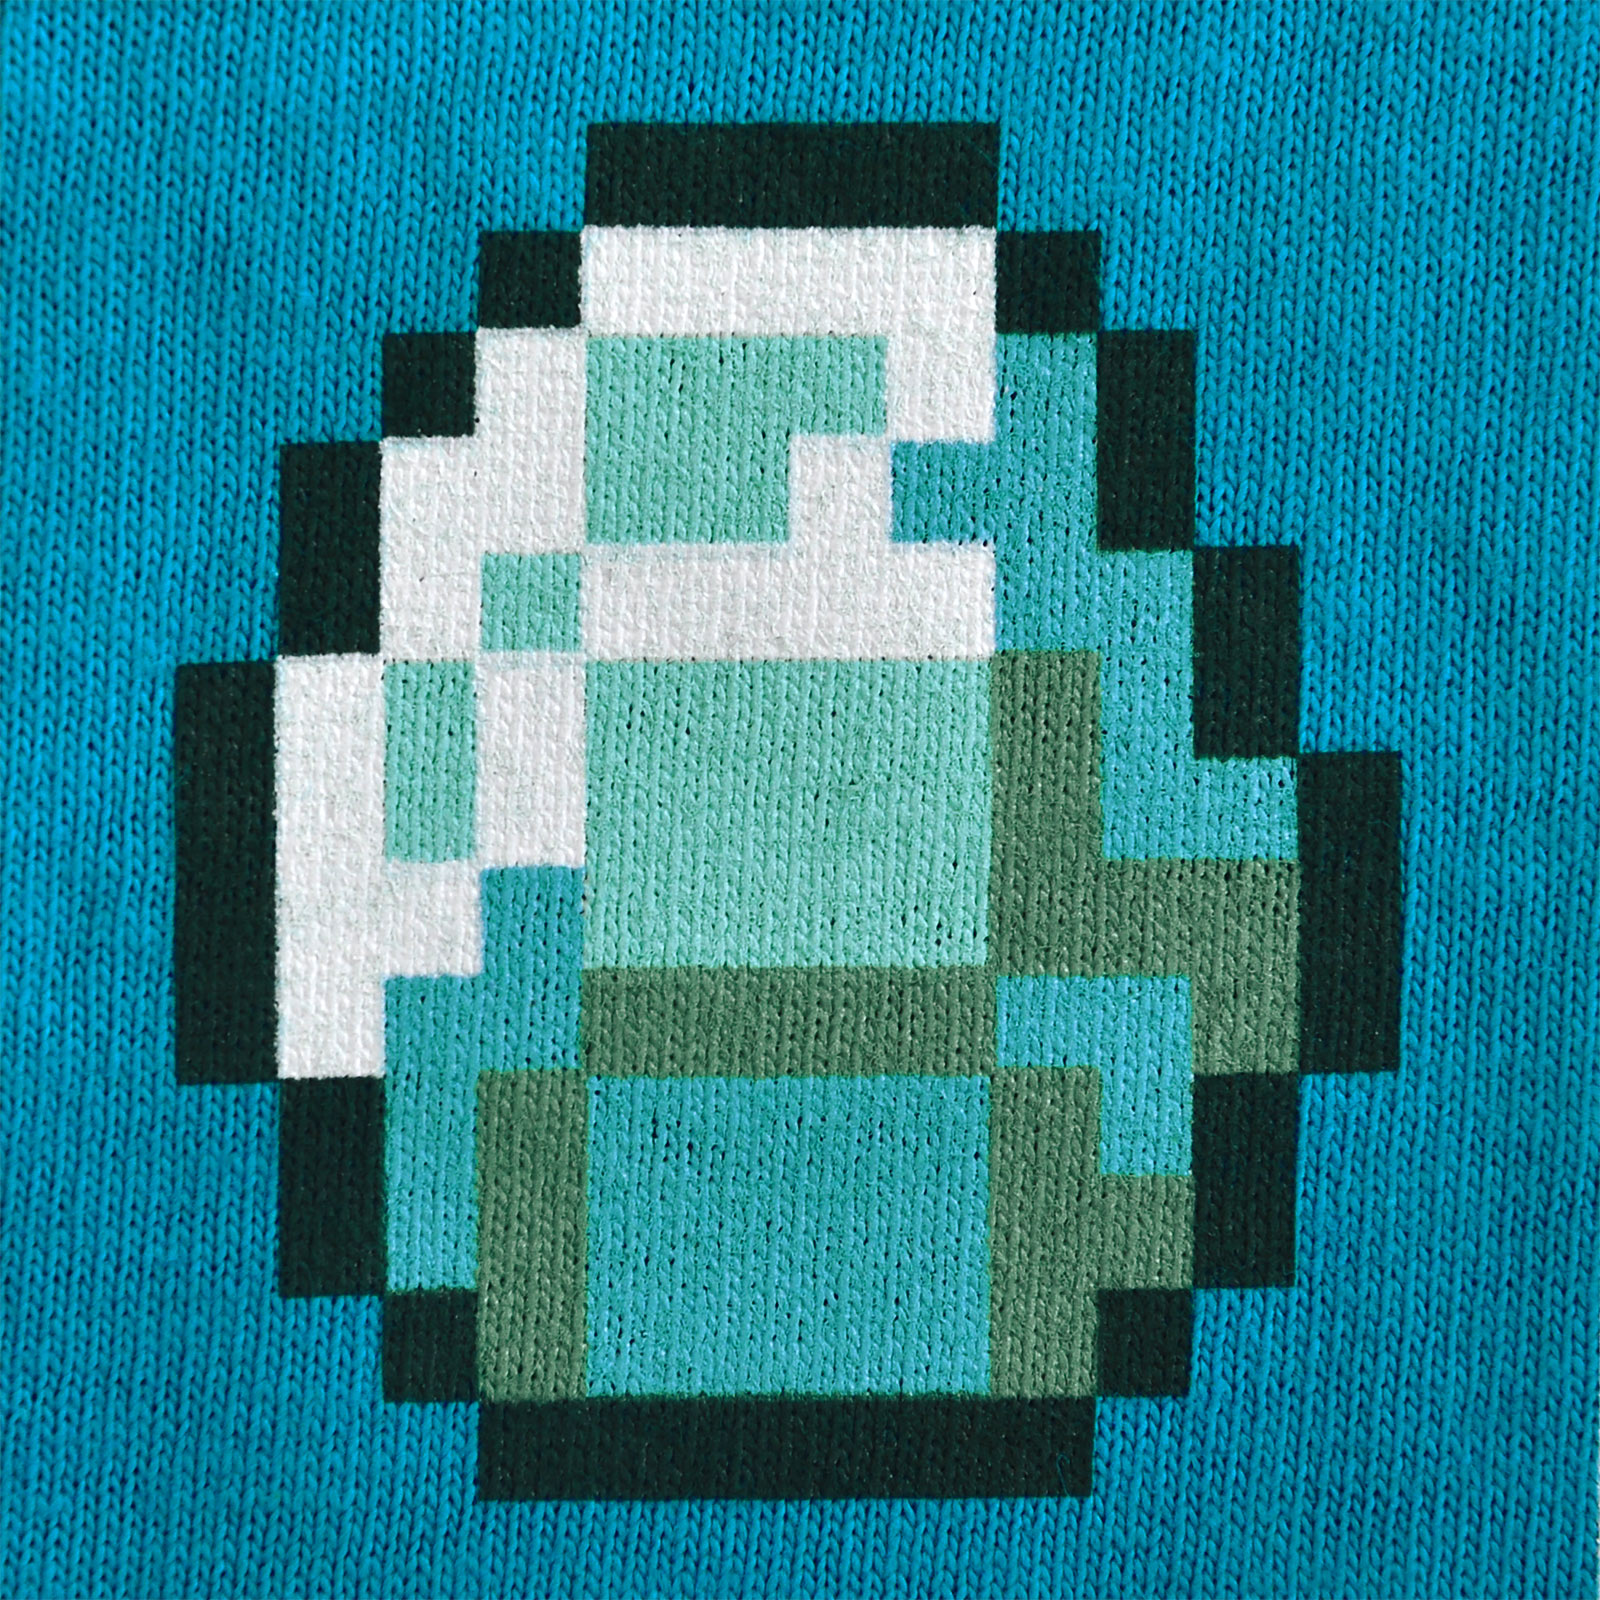 Minecraft - Diamond Kinder T-Shirt